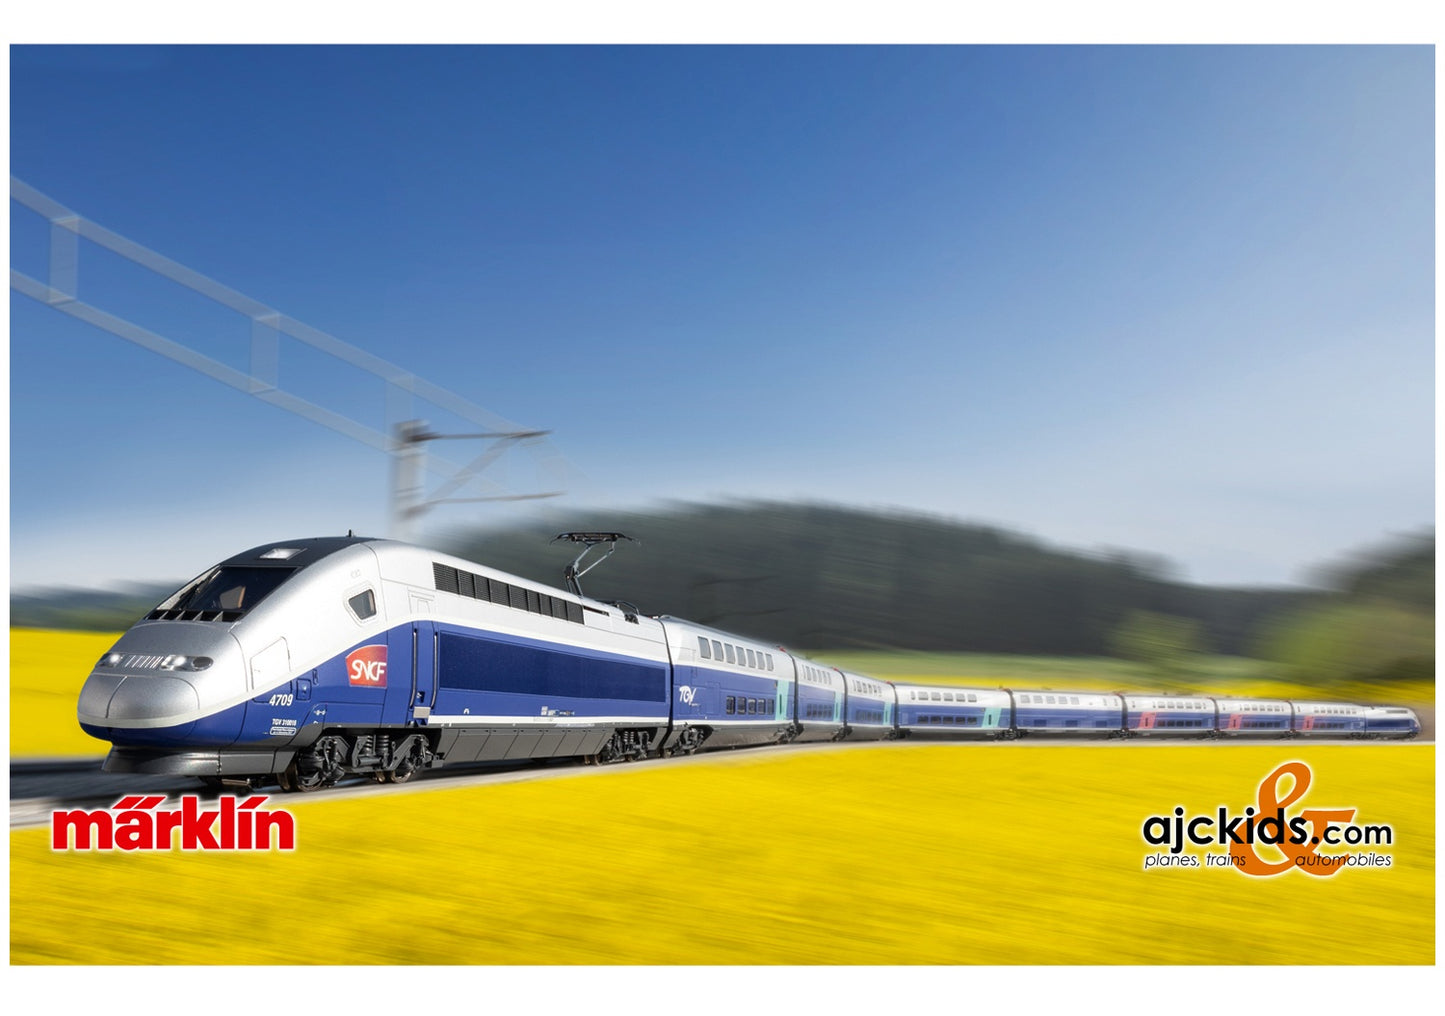 Marklin 37793 - TGV Euroduplex High-Speed Train at Ajckids.com